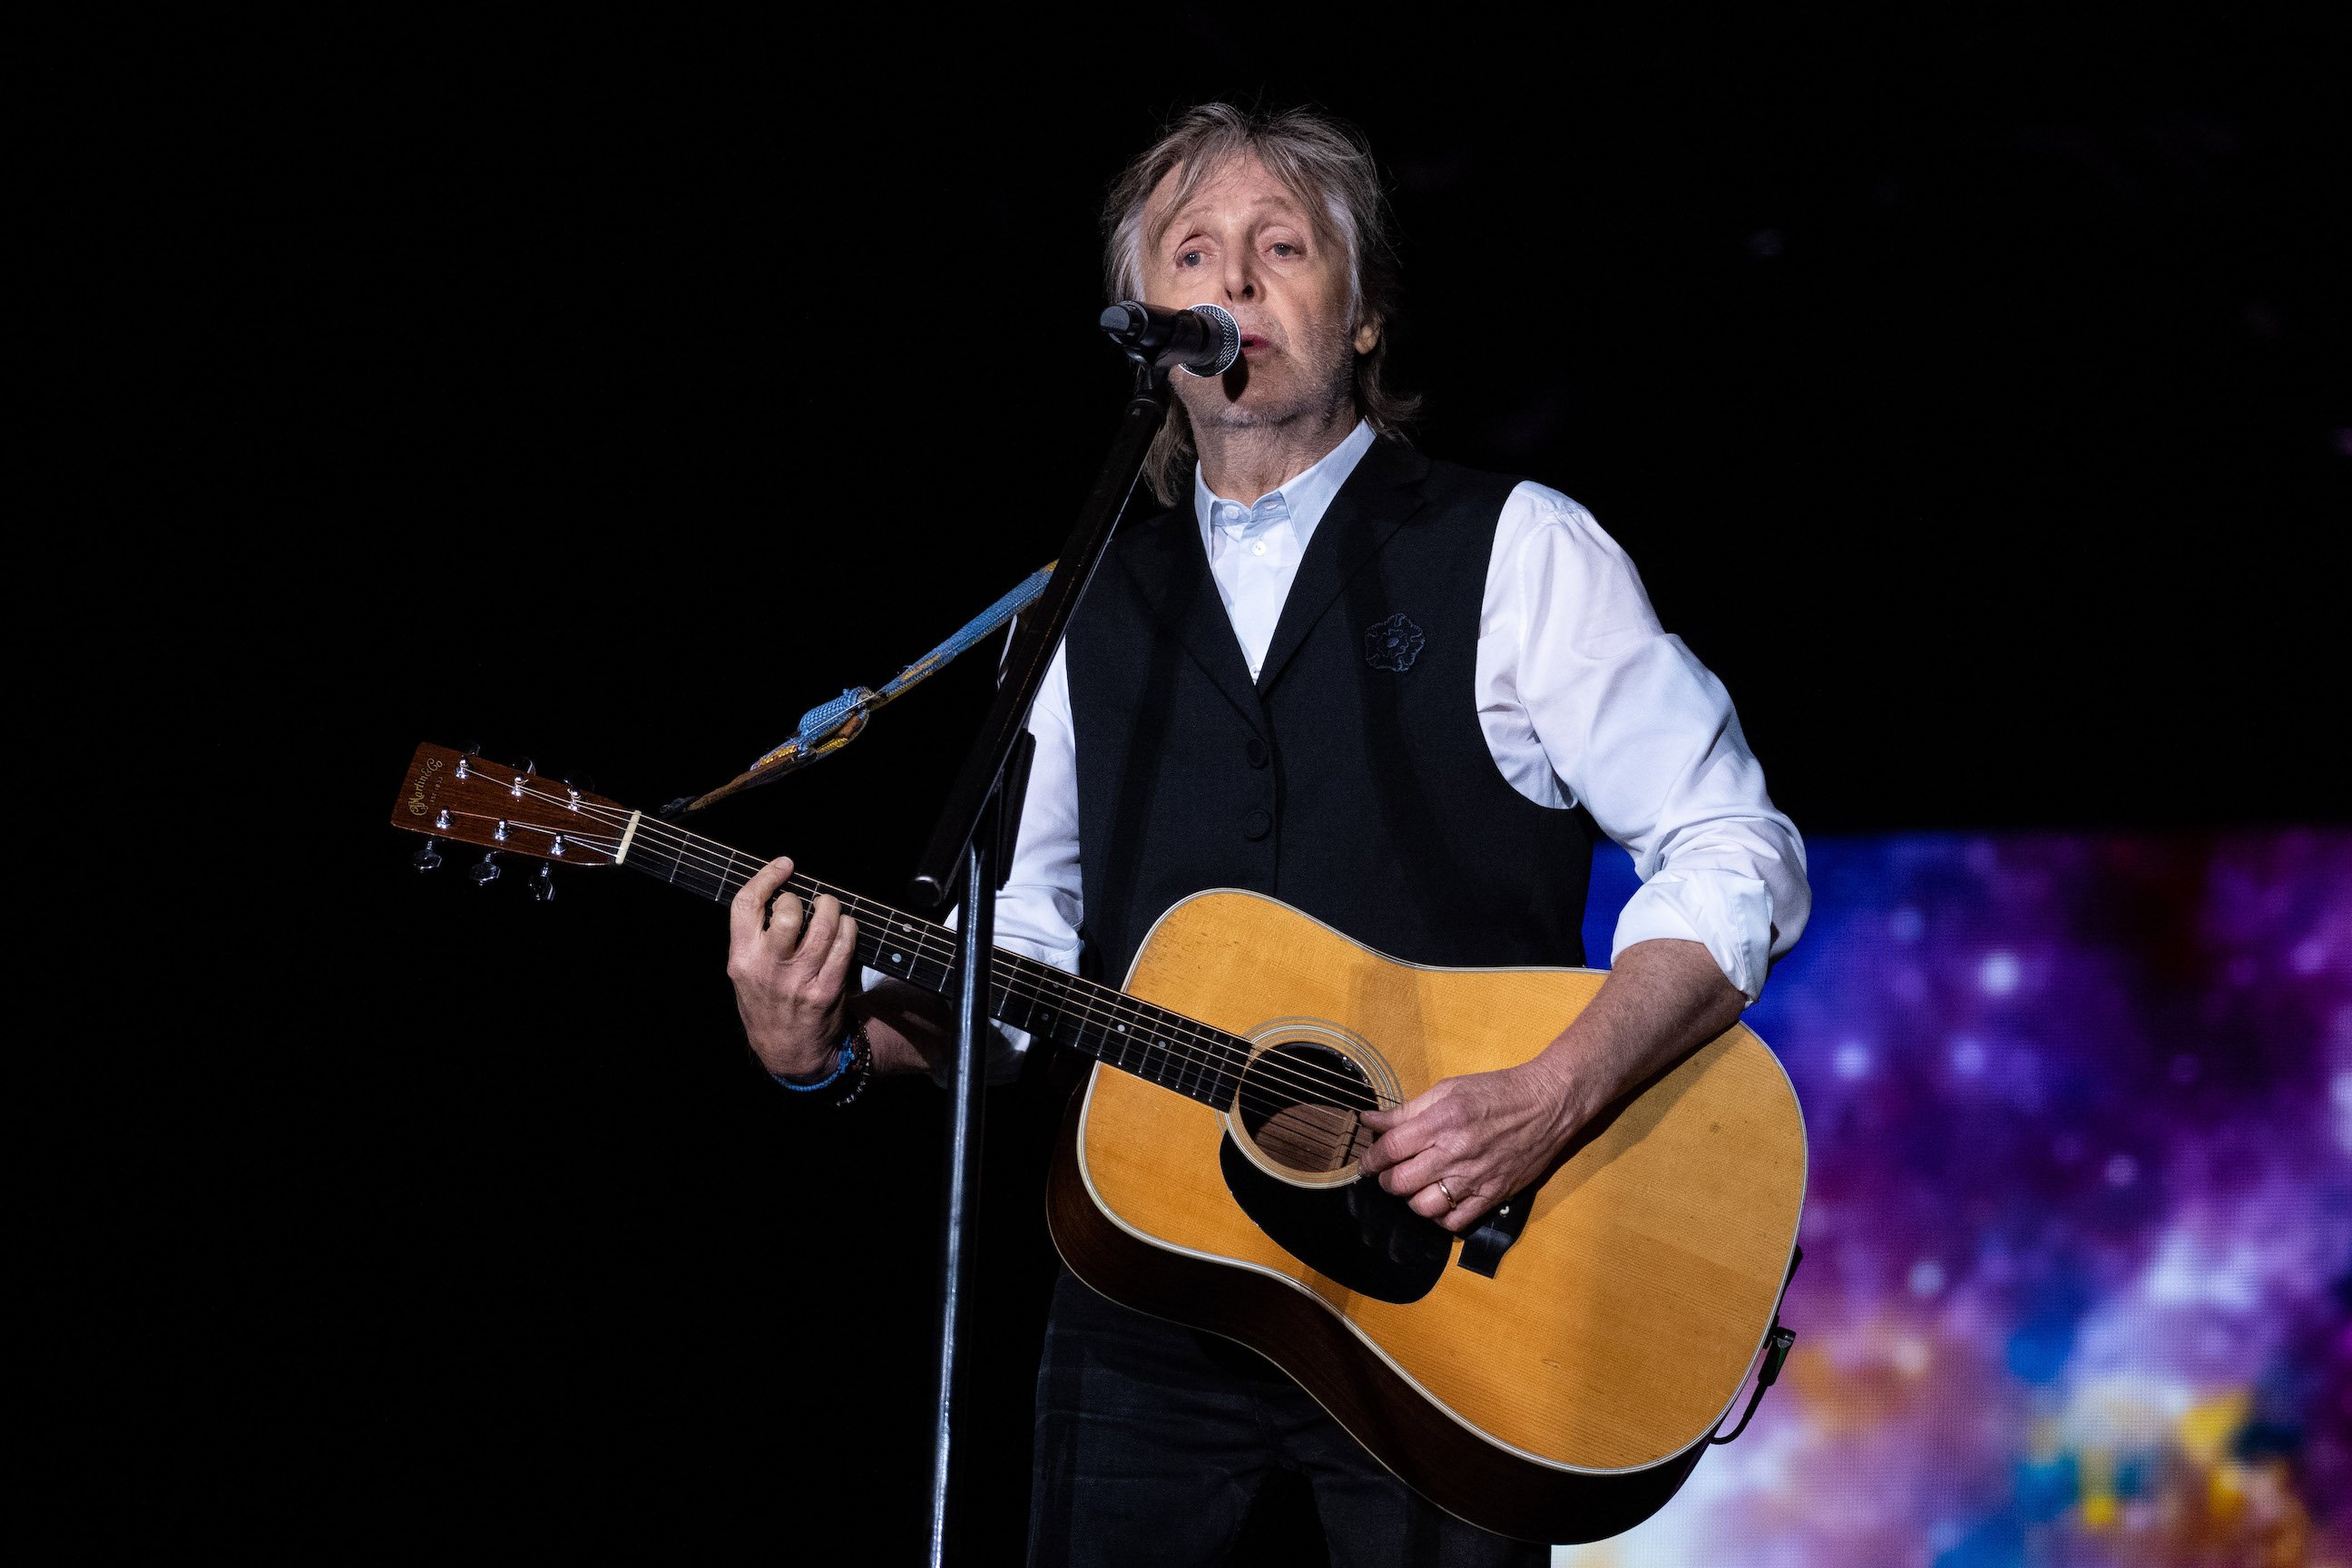 Paul McCartney performs during day four of 2022 Glastonbury Festival at Worthy Farm, Pilton